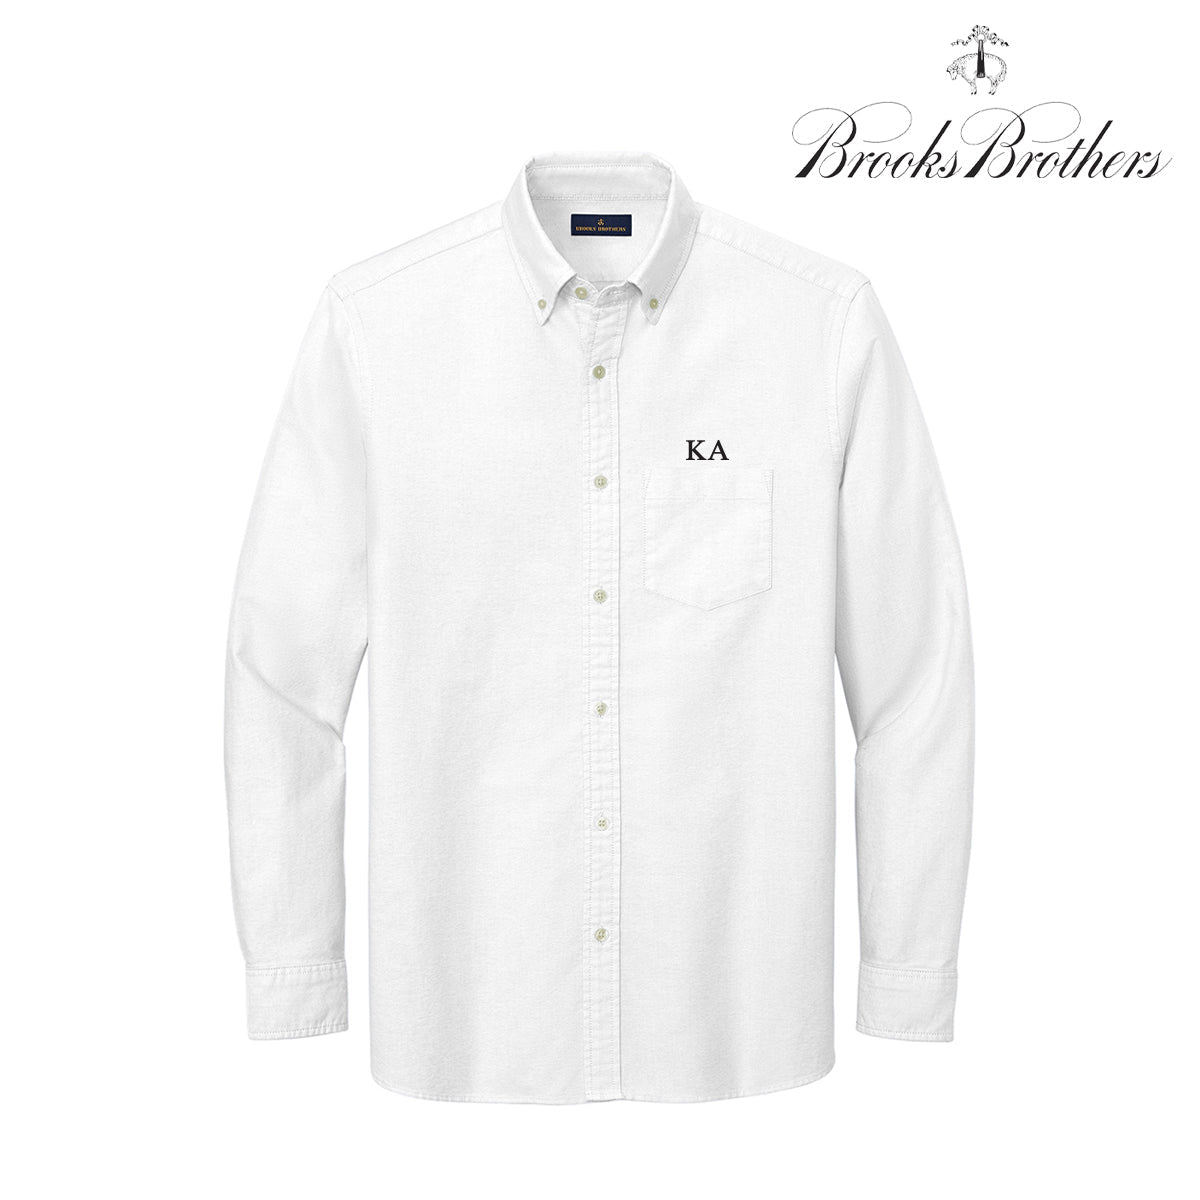 Kappa Alpha Brooks Brothers Oxford Button Up Shirt